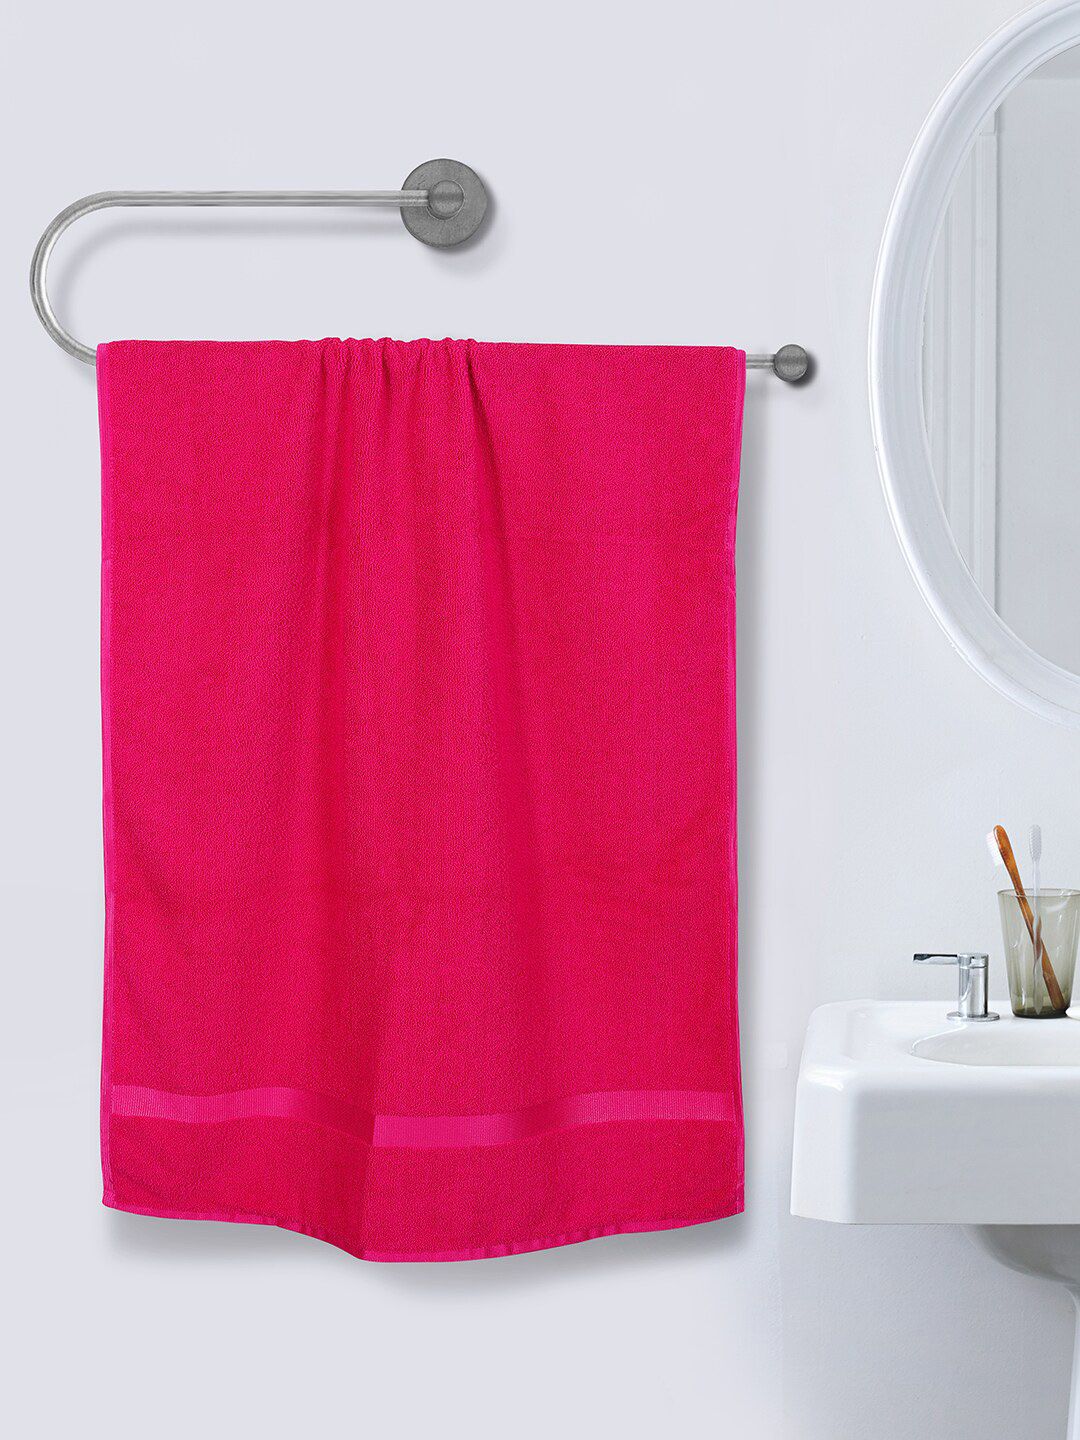 ROMEE Pink Solid 500 GSM Microfiber Bath Towel Price in India